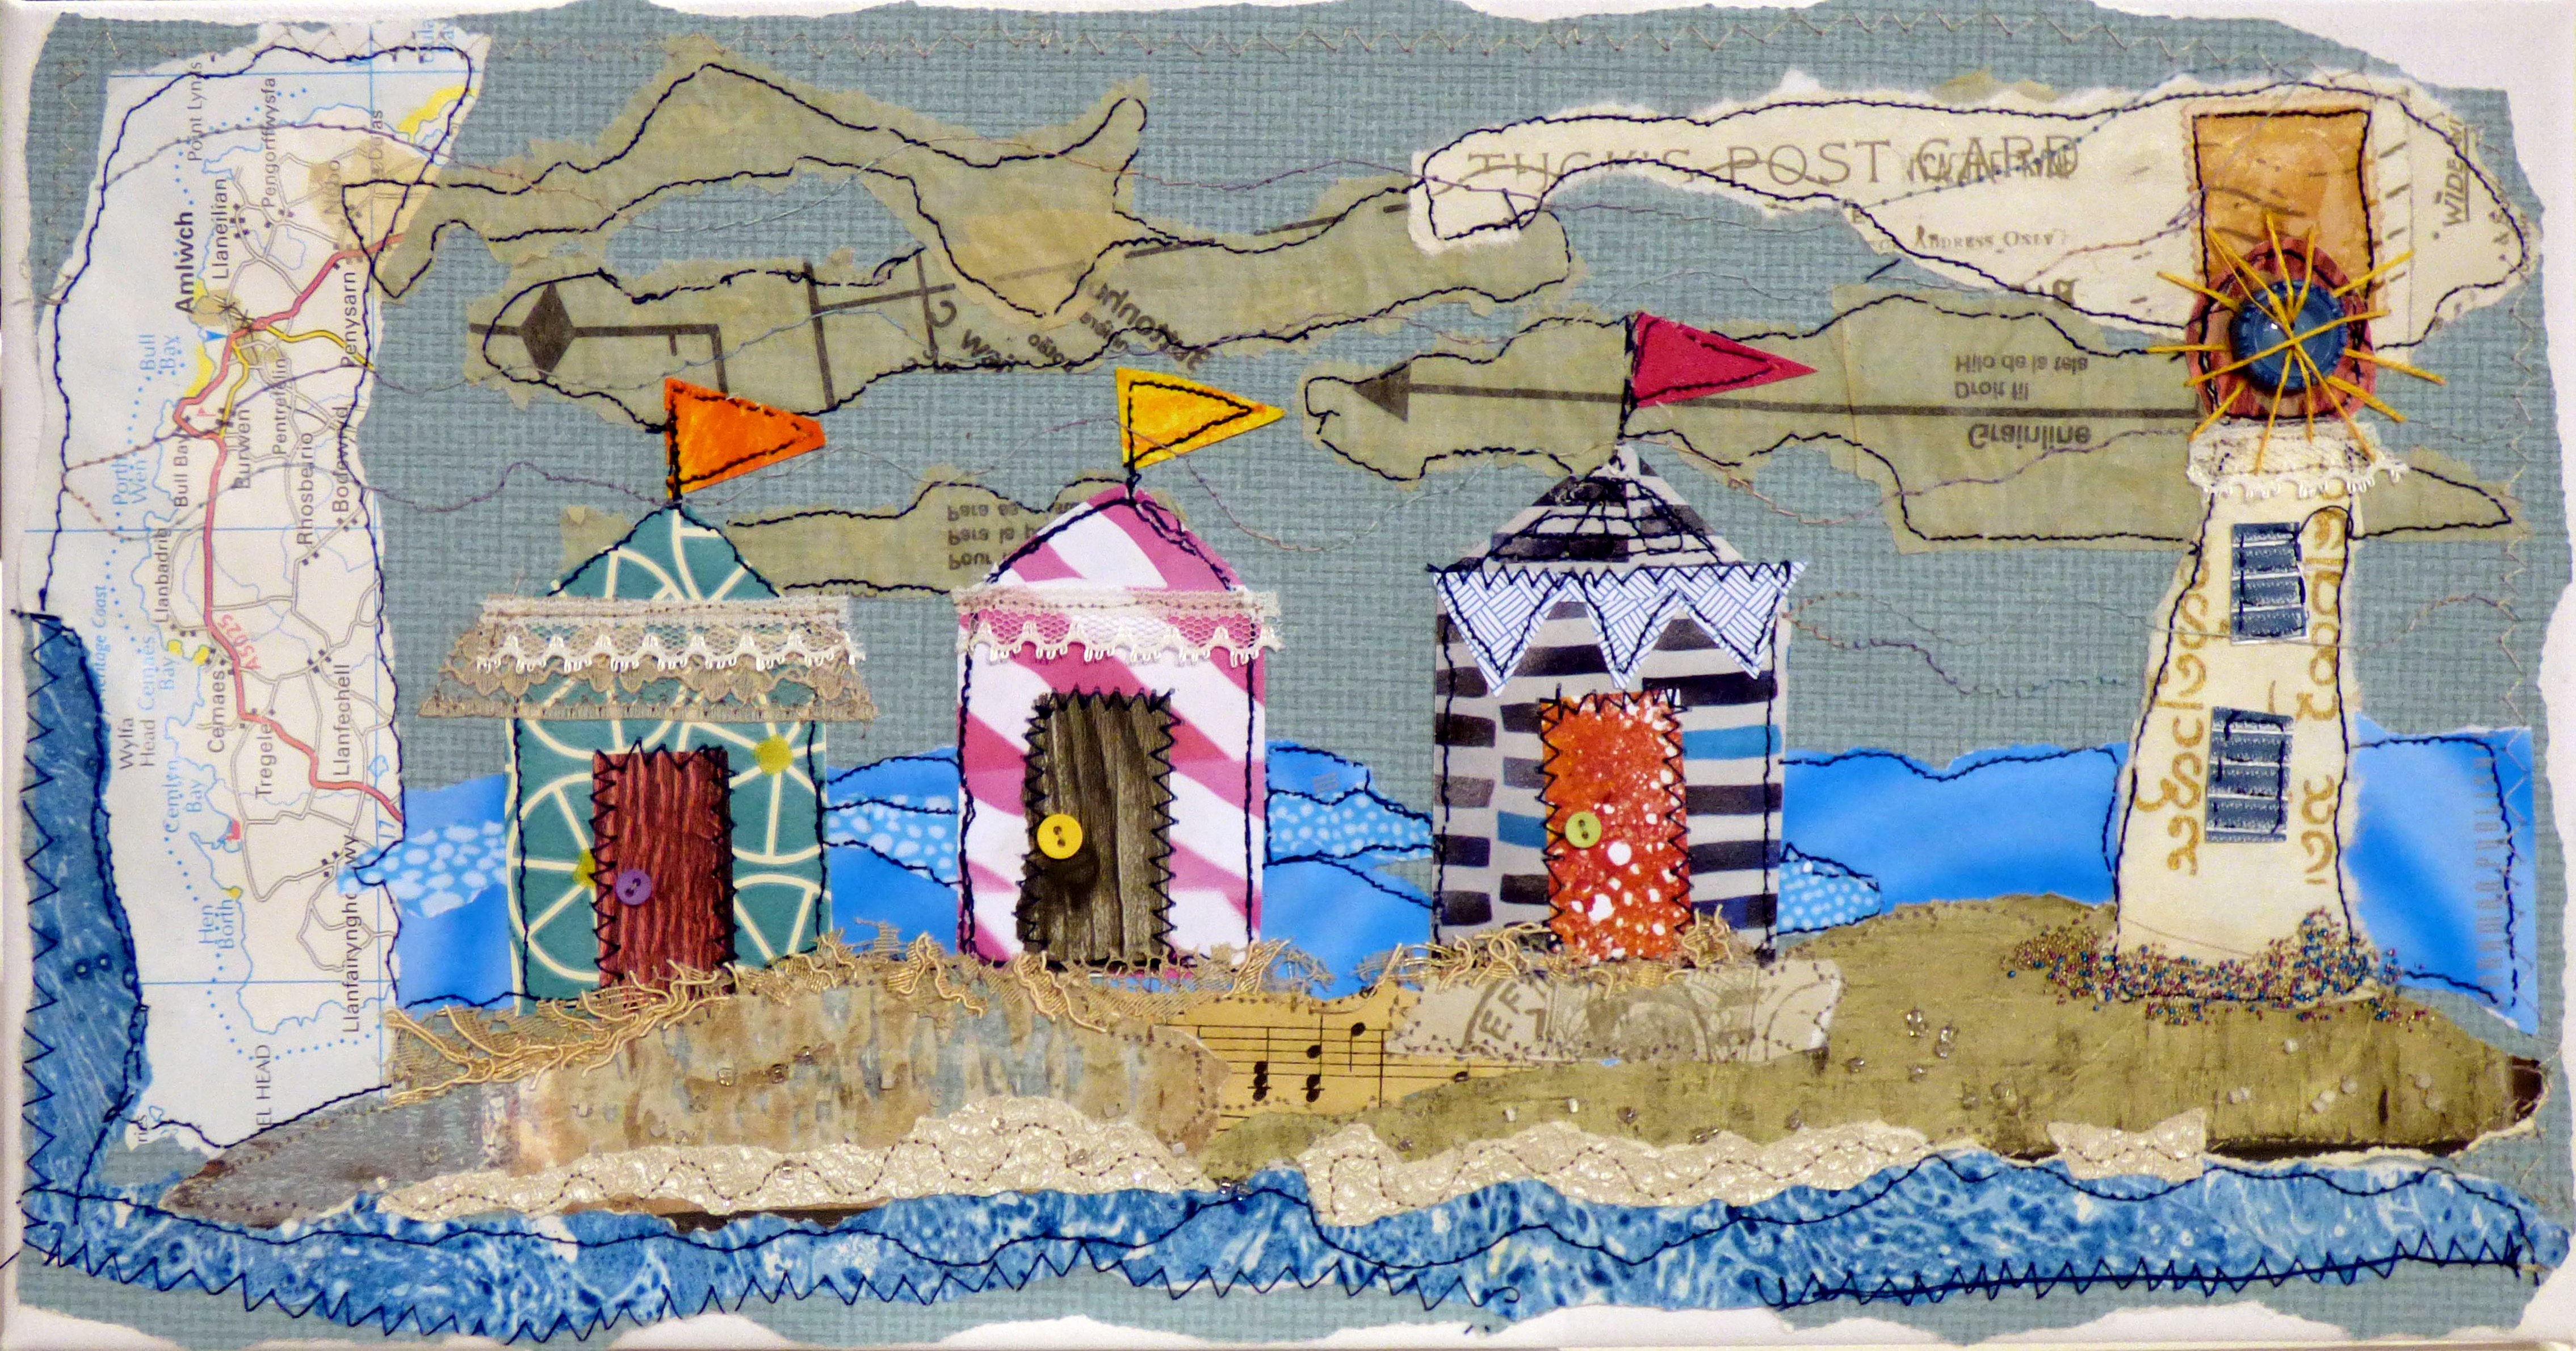 BEACH HUTS by Marilyn Smith, N.Wales EG, mixed media & machine stitch